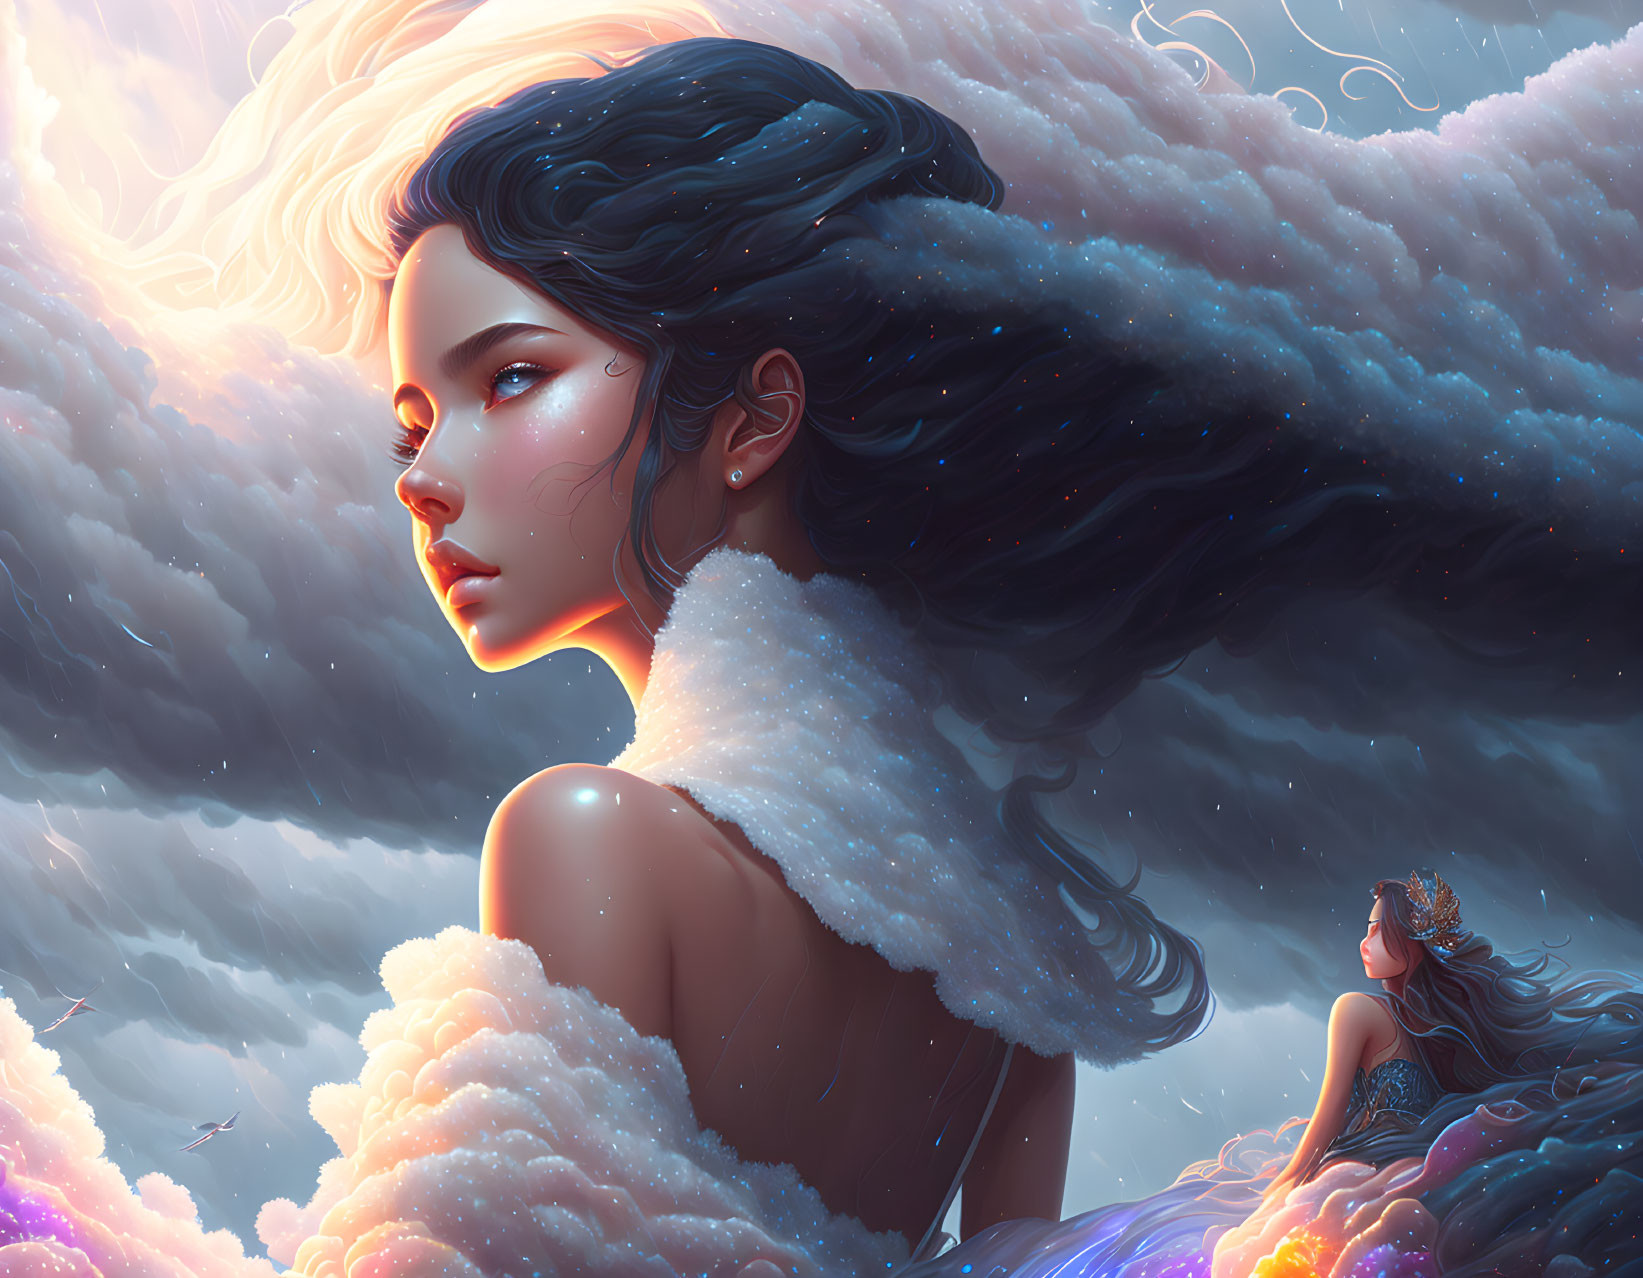 Digital artwork: Woman with flowing hair merged with clouds, gazing at miniature self in fiery skies